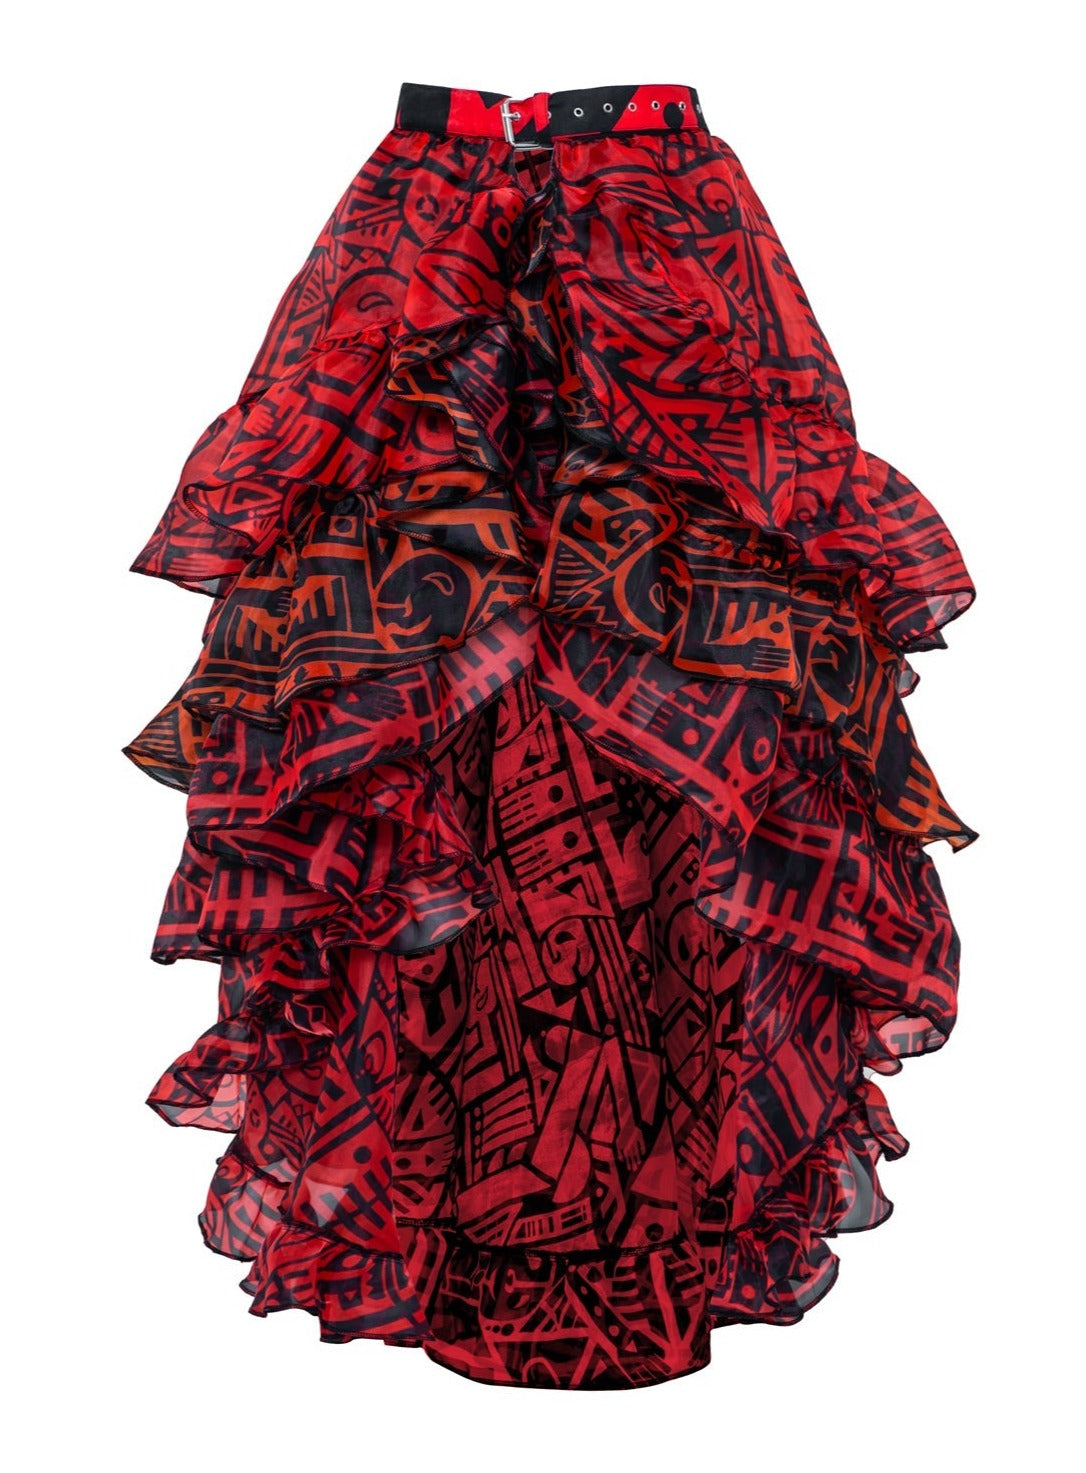 Jackalopeland X Bam-Bam Party Skirt Red